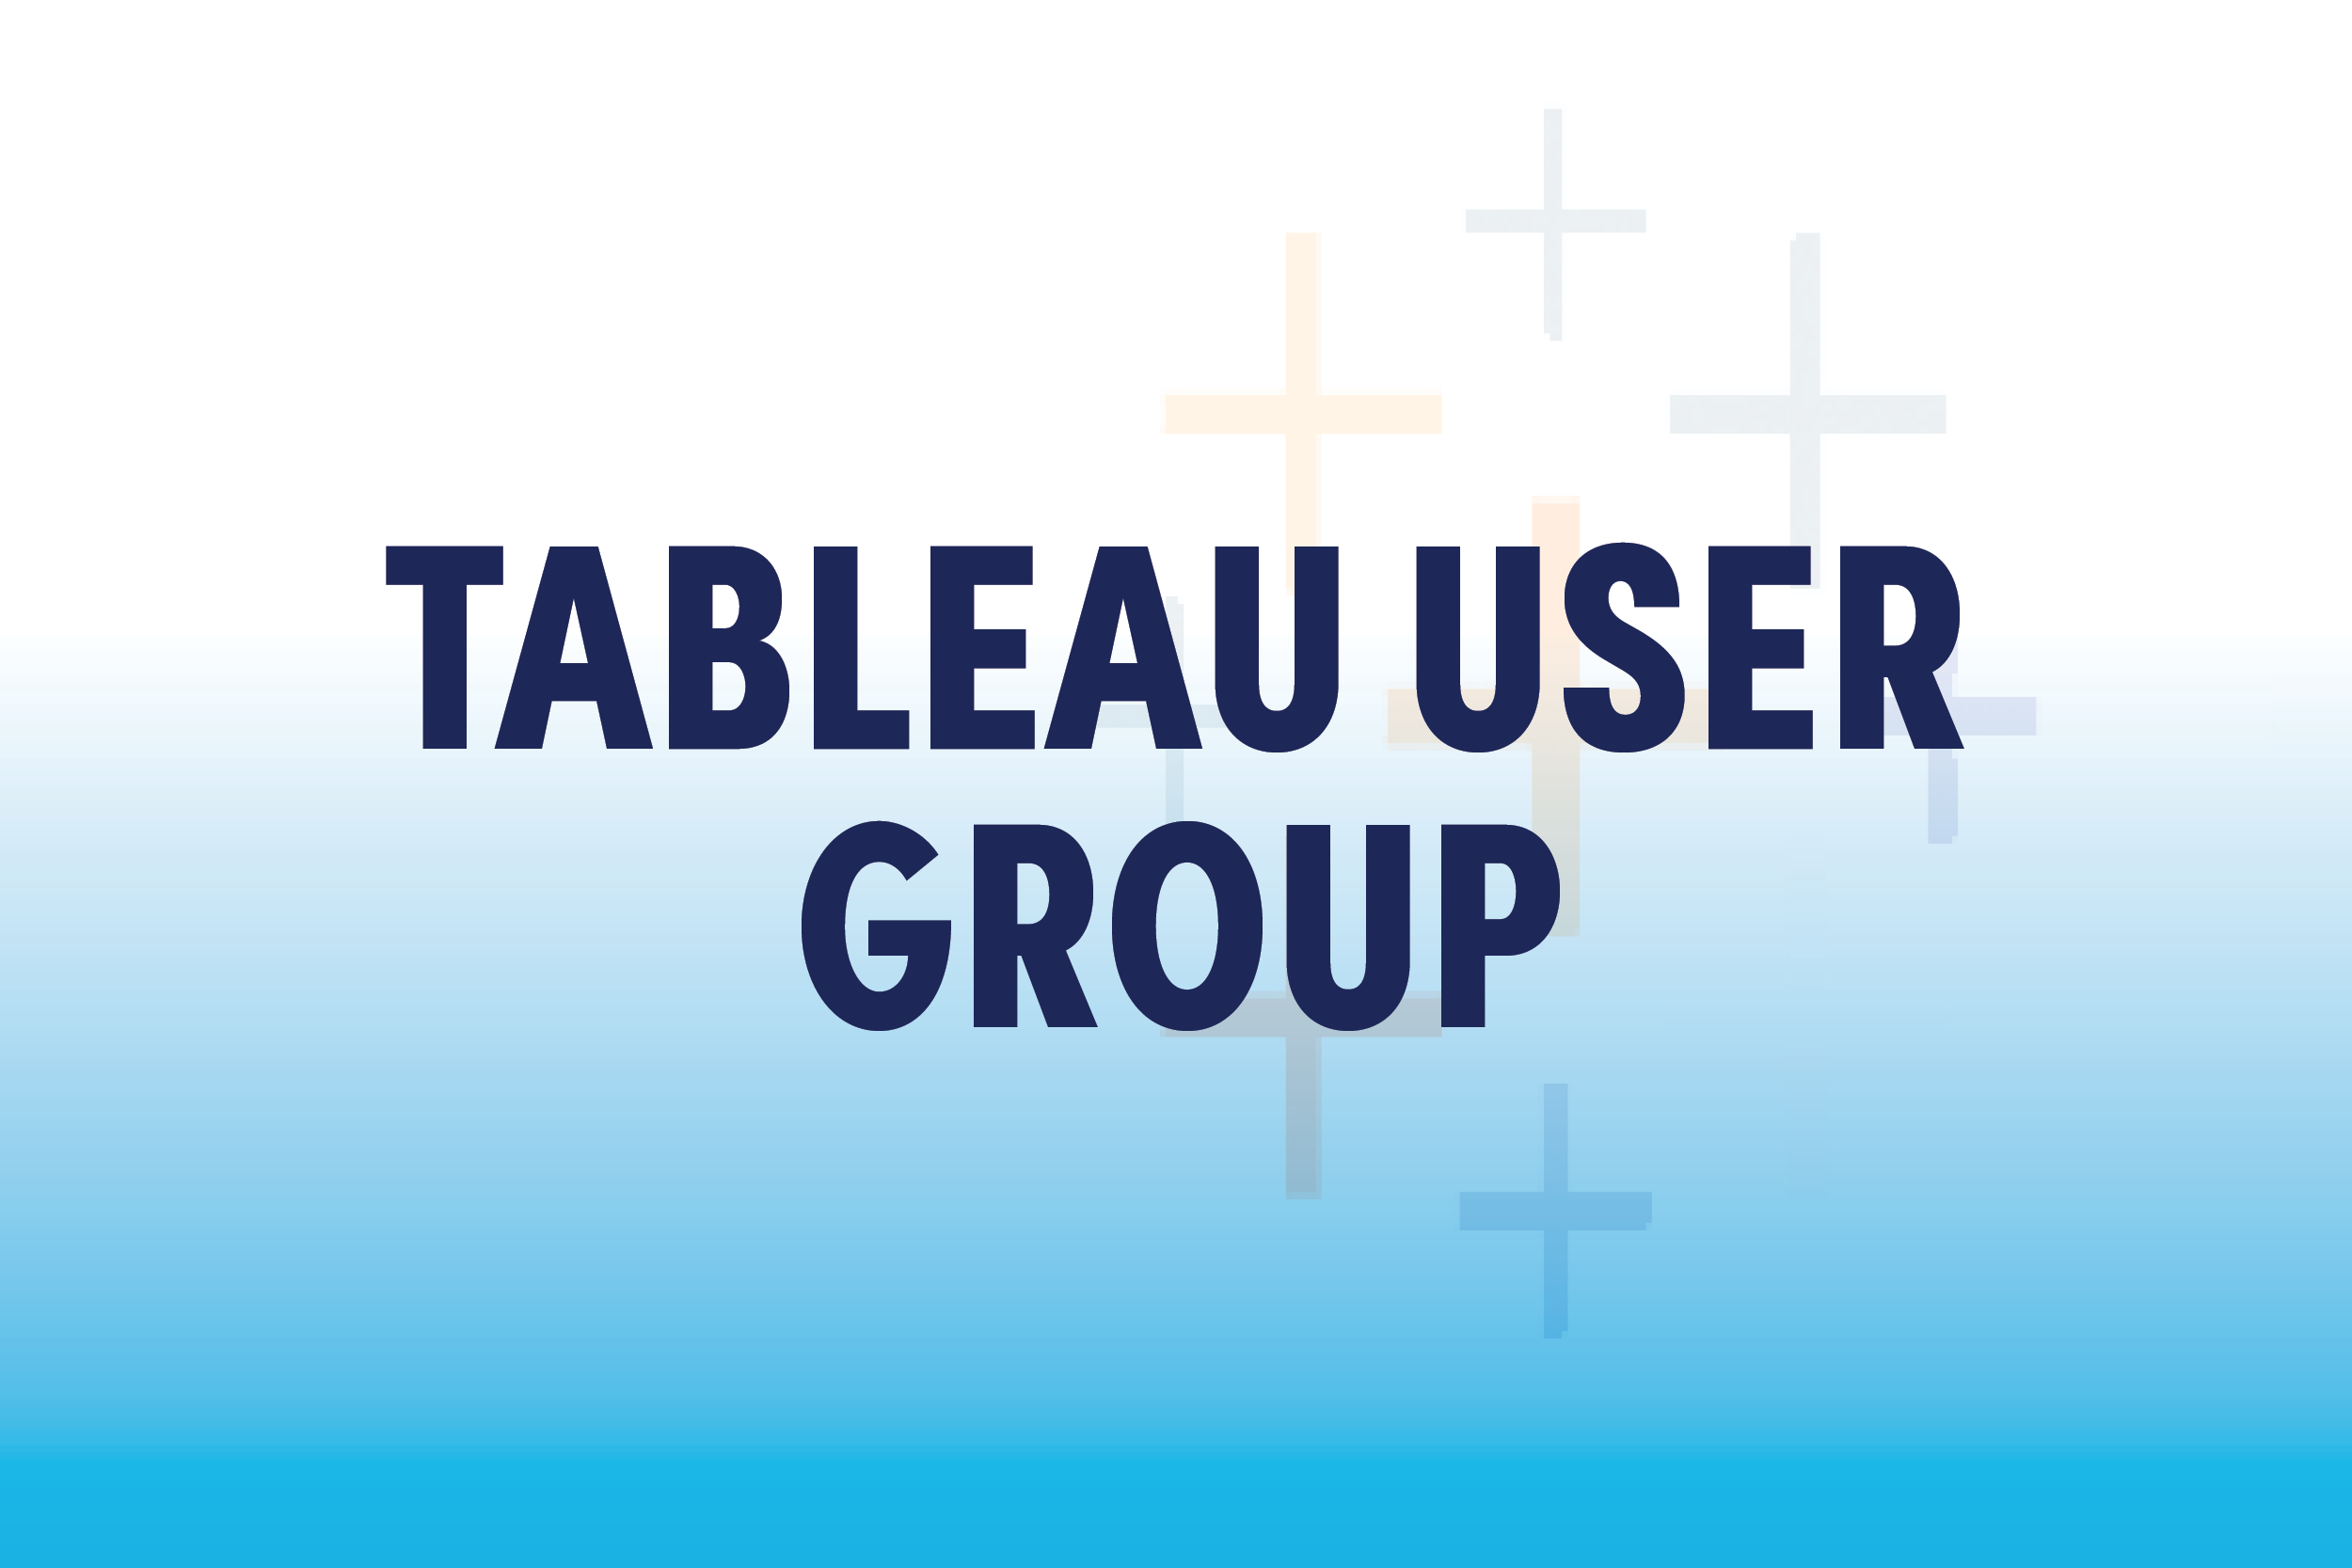 Tableau User Group